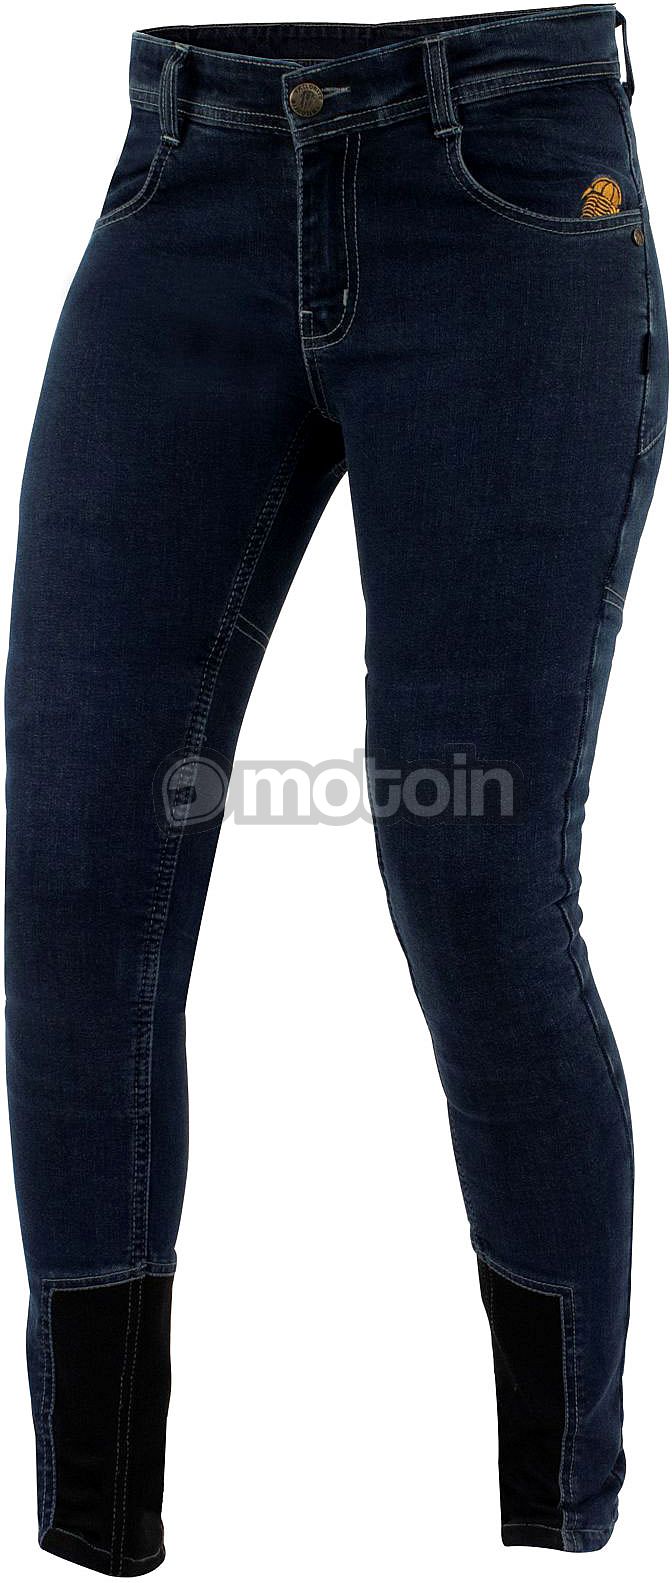 Trilobite All Shape, jeans donne fine in forma